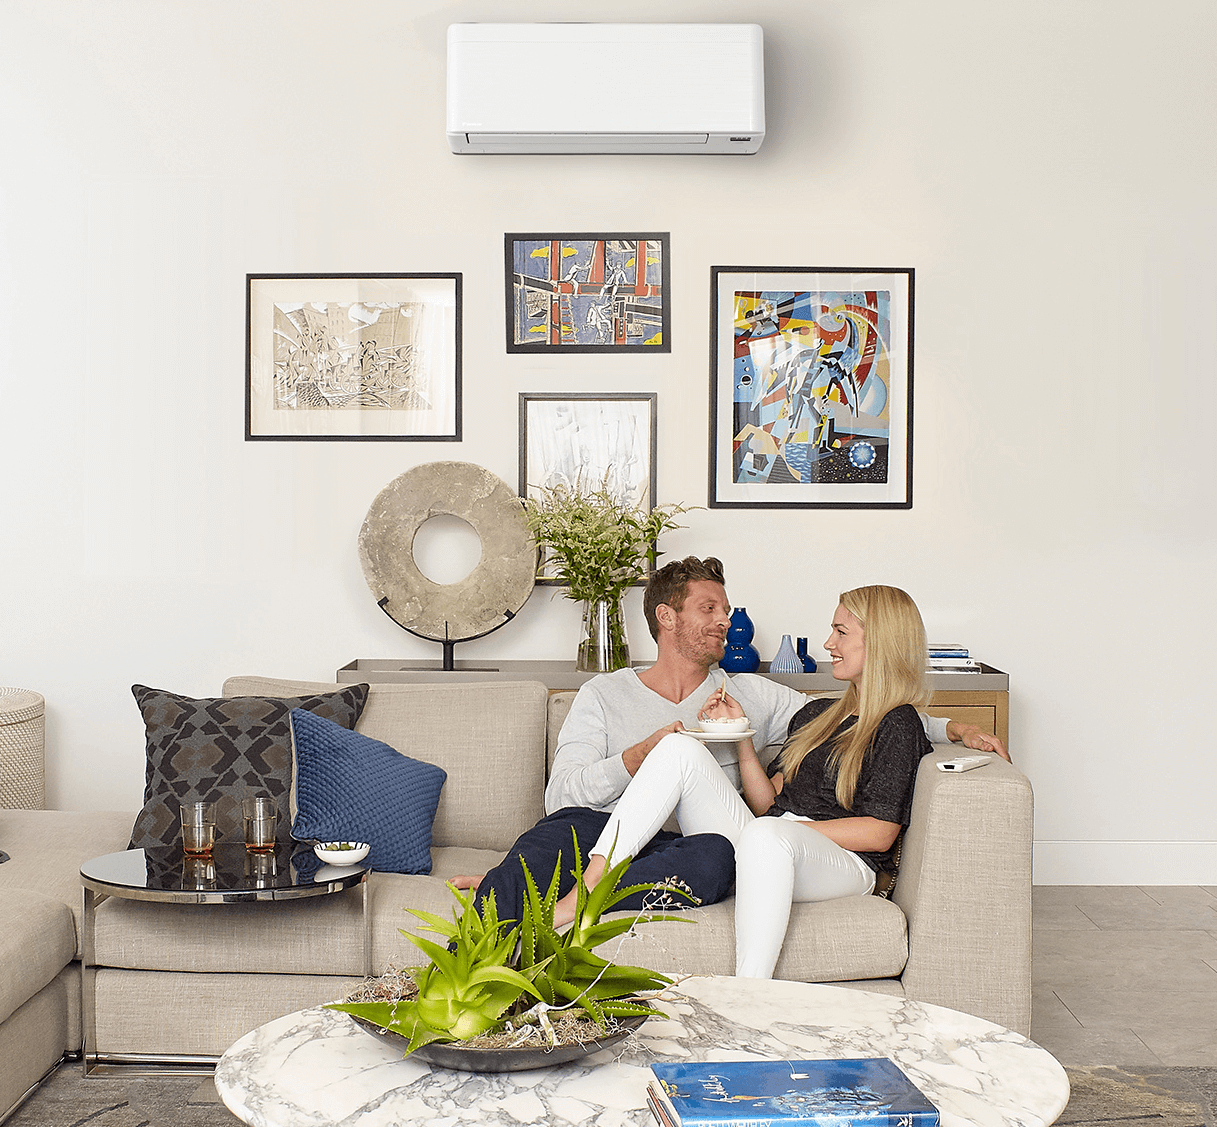 Leumeah Air Conditioning – Daikin Air Conditioner